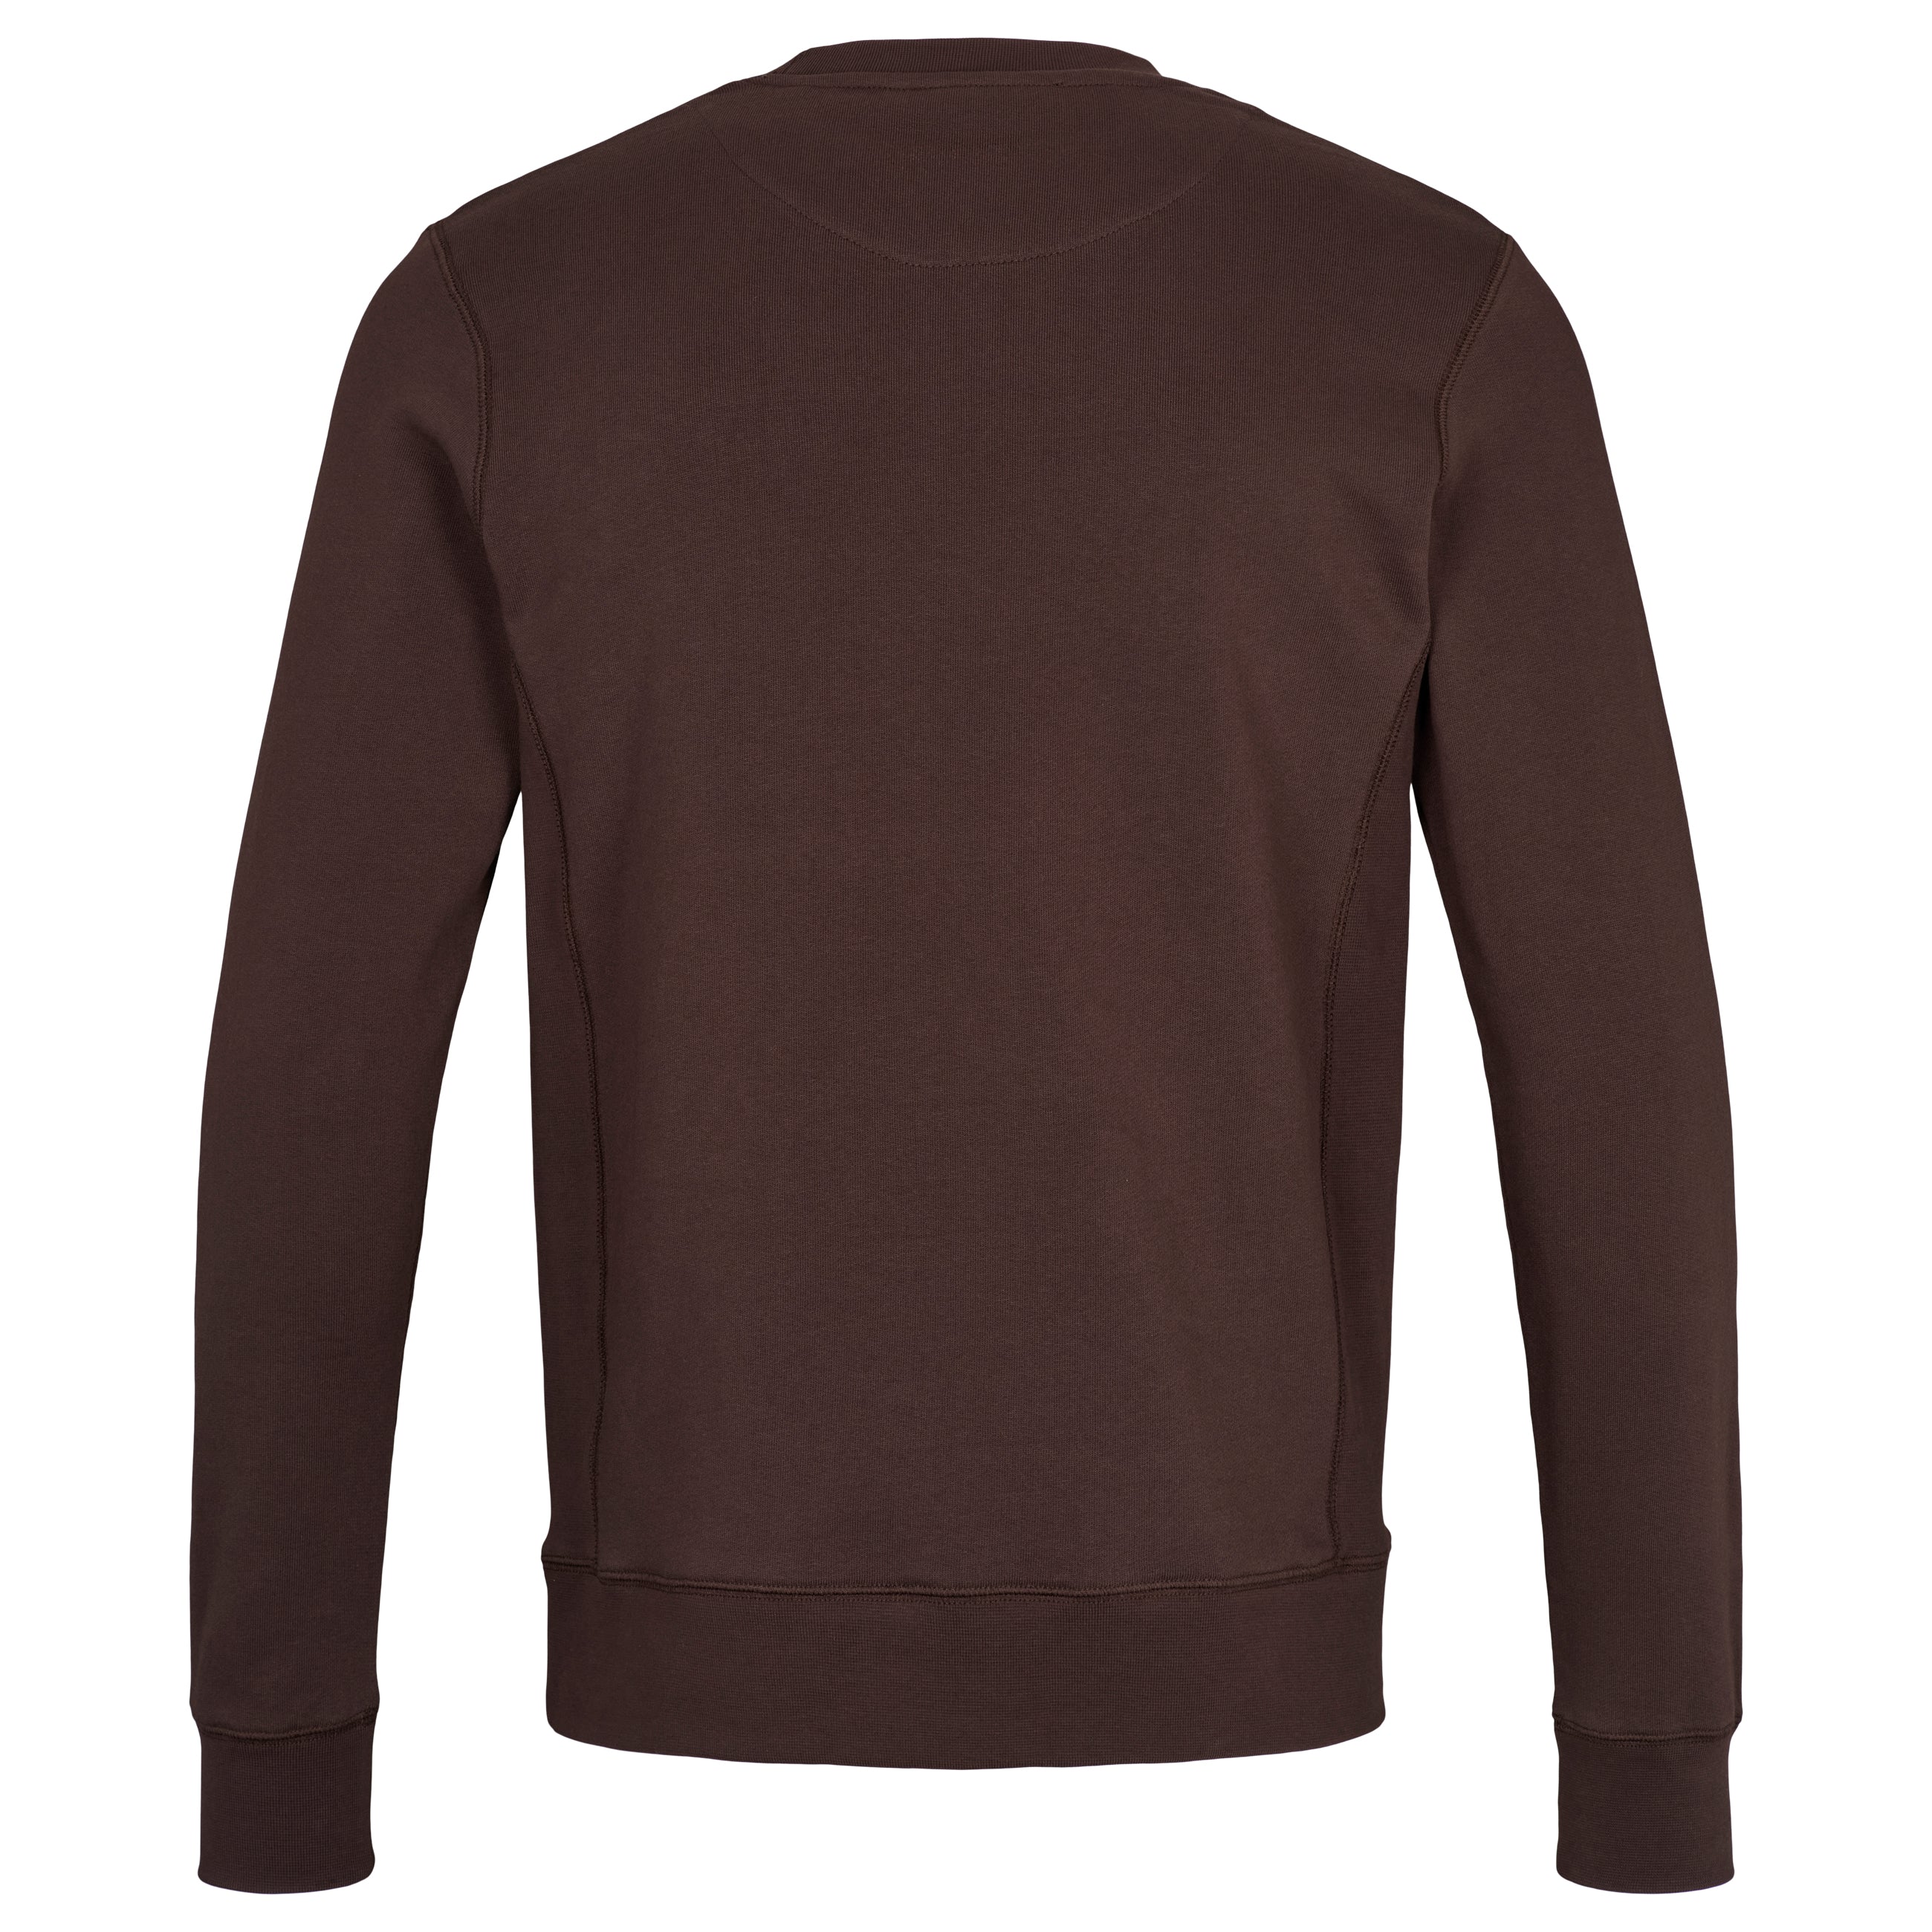 By Garment Makers The Organic Sweatshirt Sweatshirt 3000 Ebony Brown